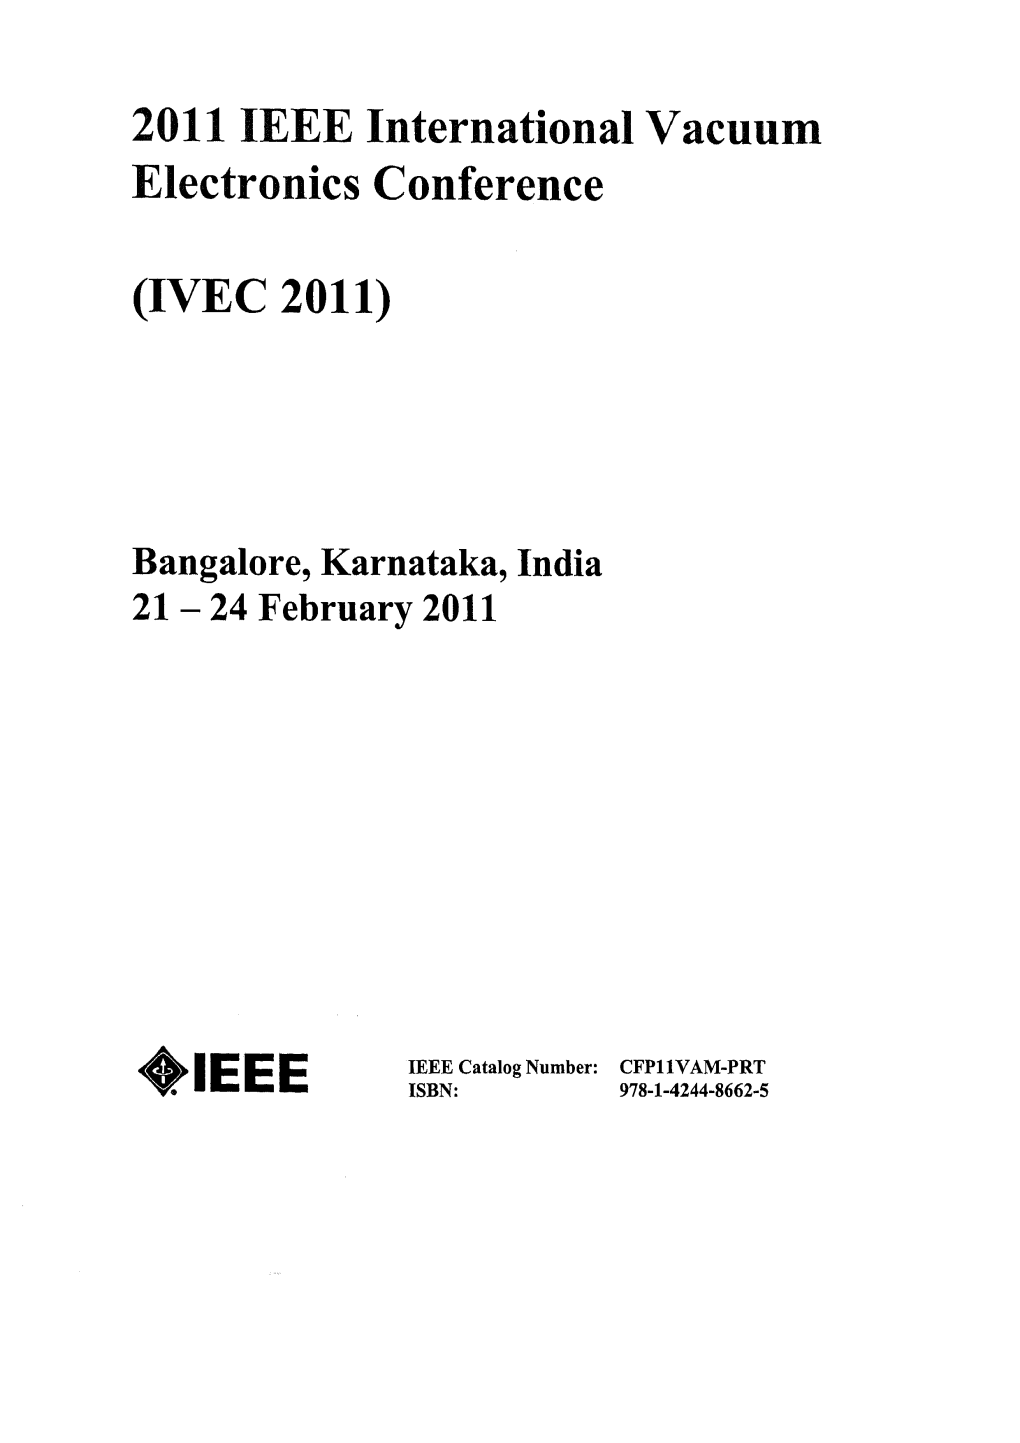 (IVEC 2011) : Bangalore, Karnataka, India, 21